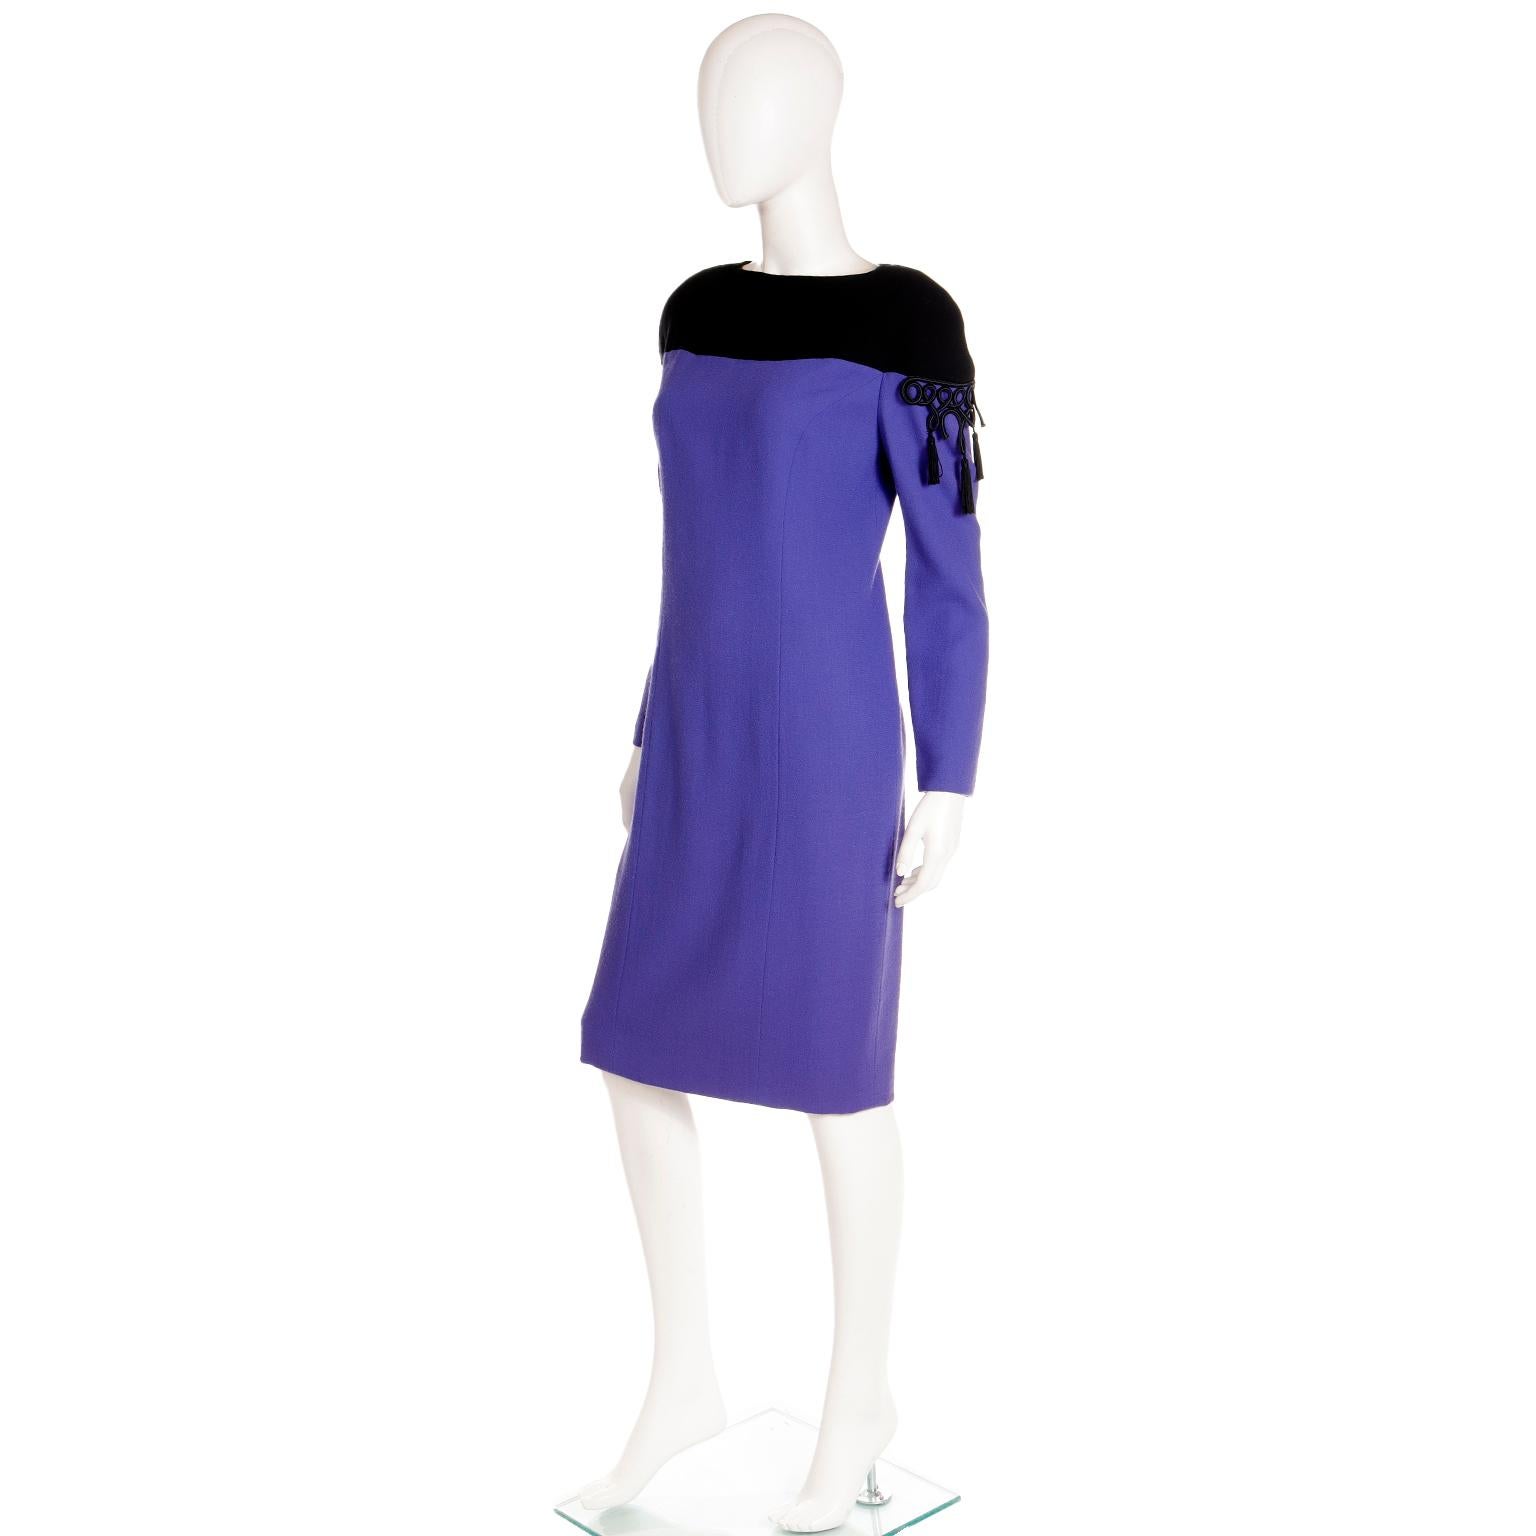 Vintage 1980s Bob Mackie Purple Dress With Black Tassels & Braid For Sale 1